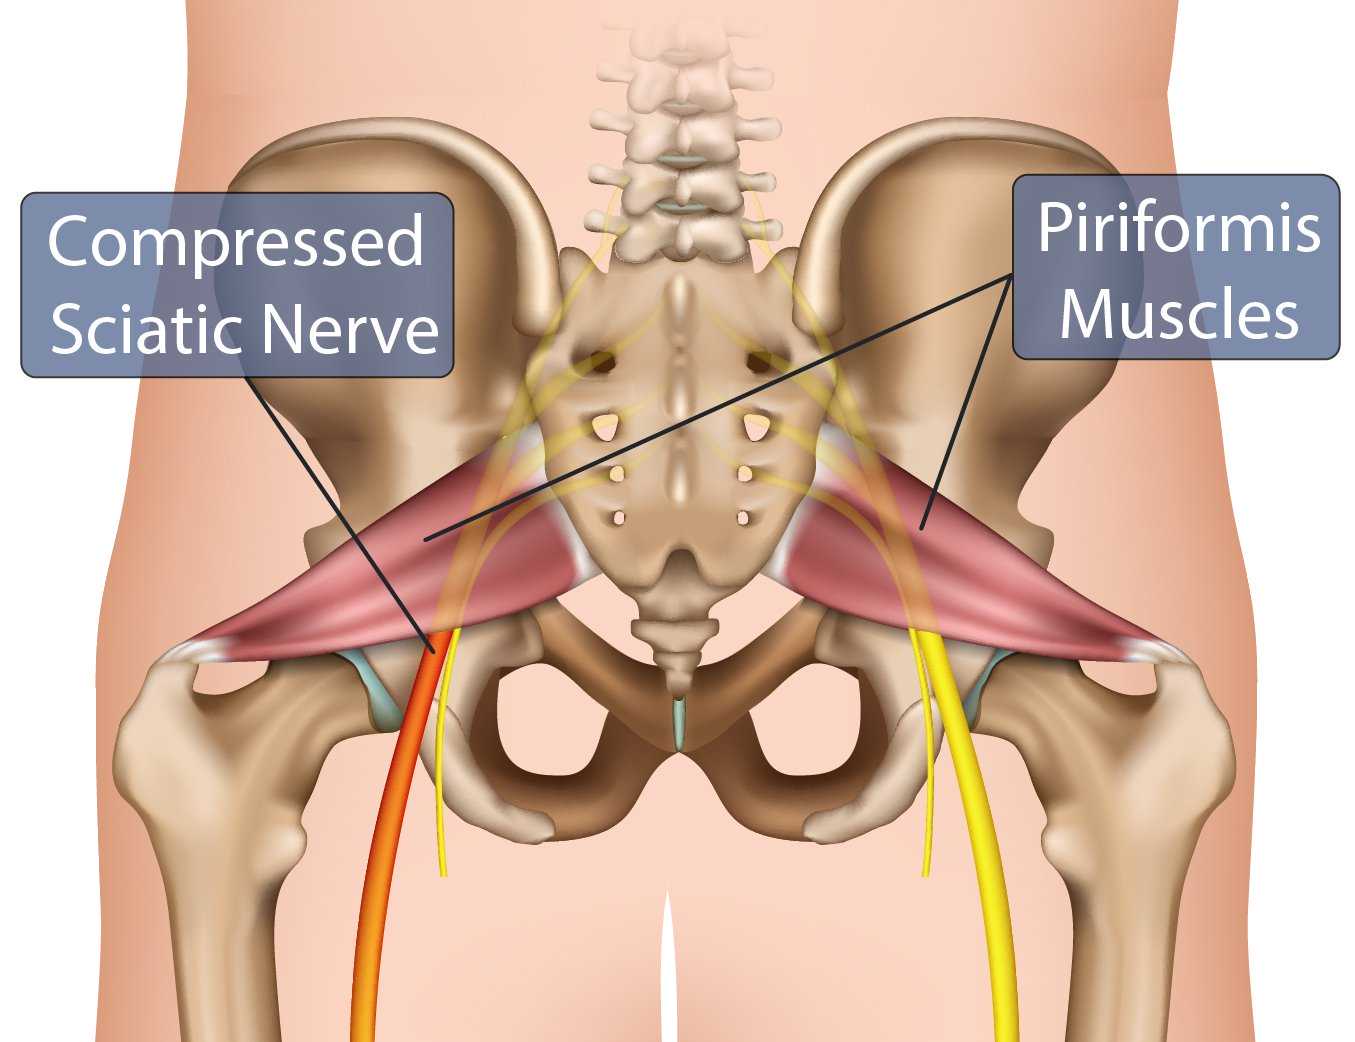 Piriformis Muscles Compressed Nerve